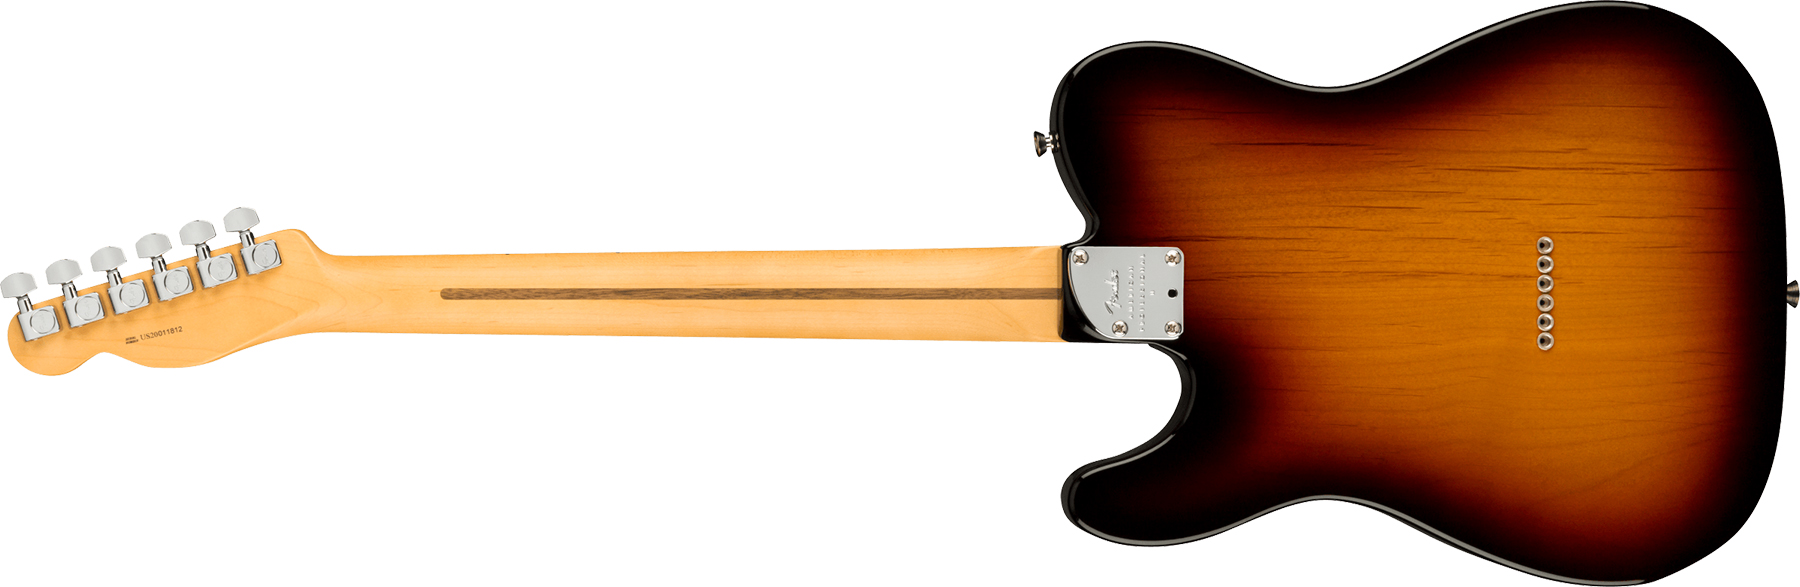 Fender Tele American Professional Ii Usa Mn - 3-color Sunburst - Televorm elektrische gitaar - Variation 1